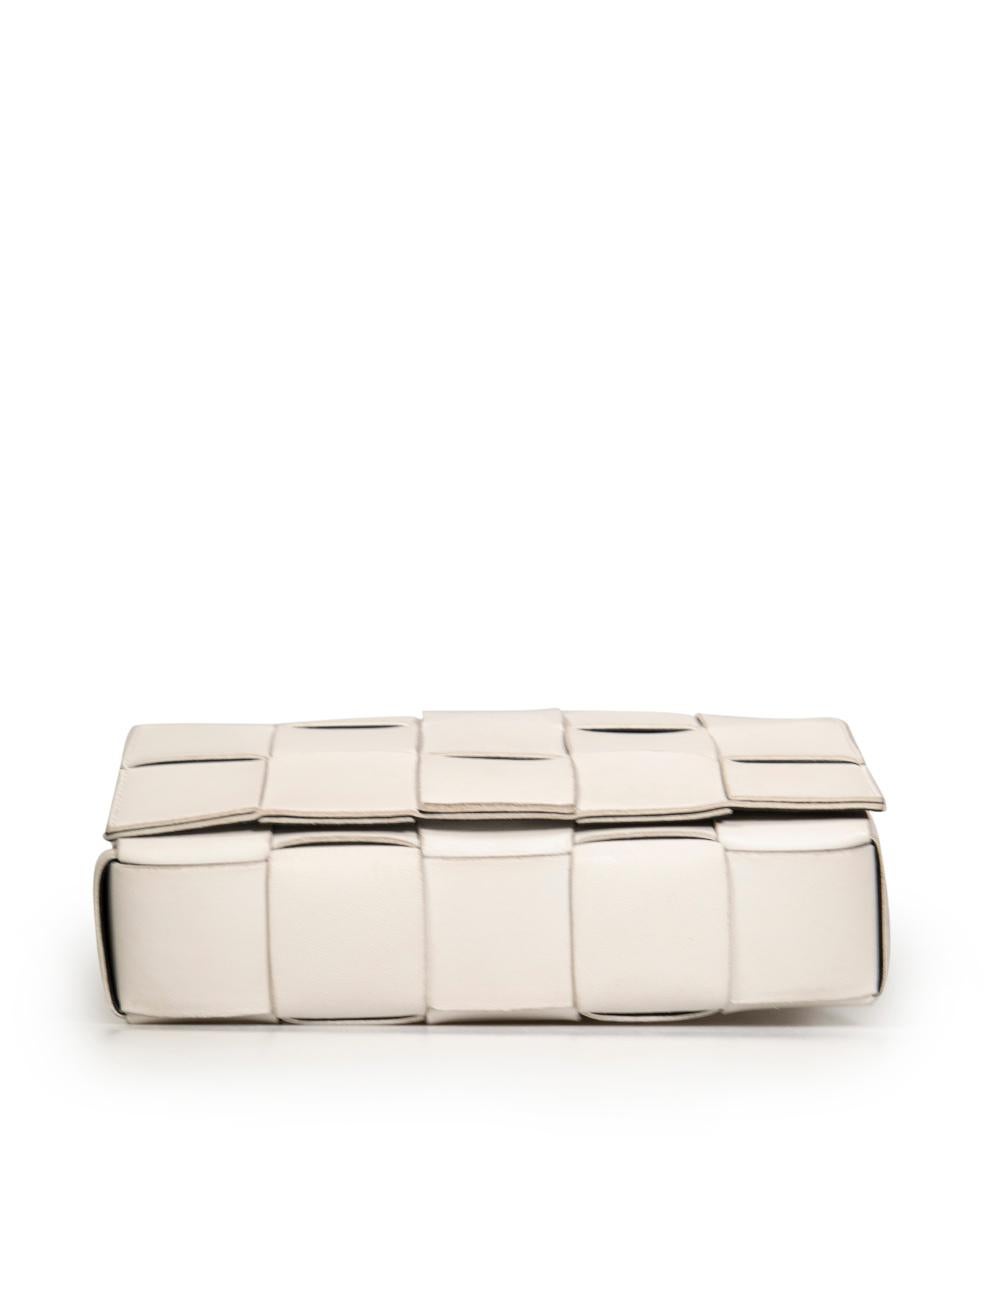 Women's Bottega Veneta White Leather Intrecciato Cassette Bag For Sale